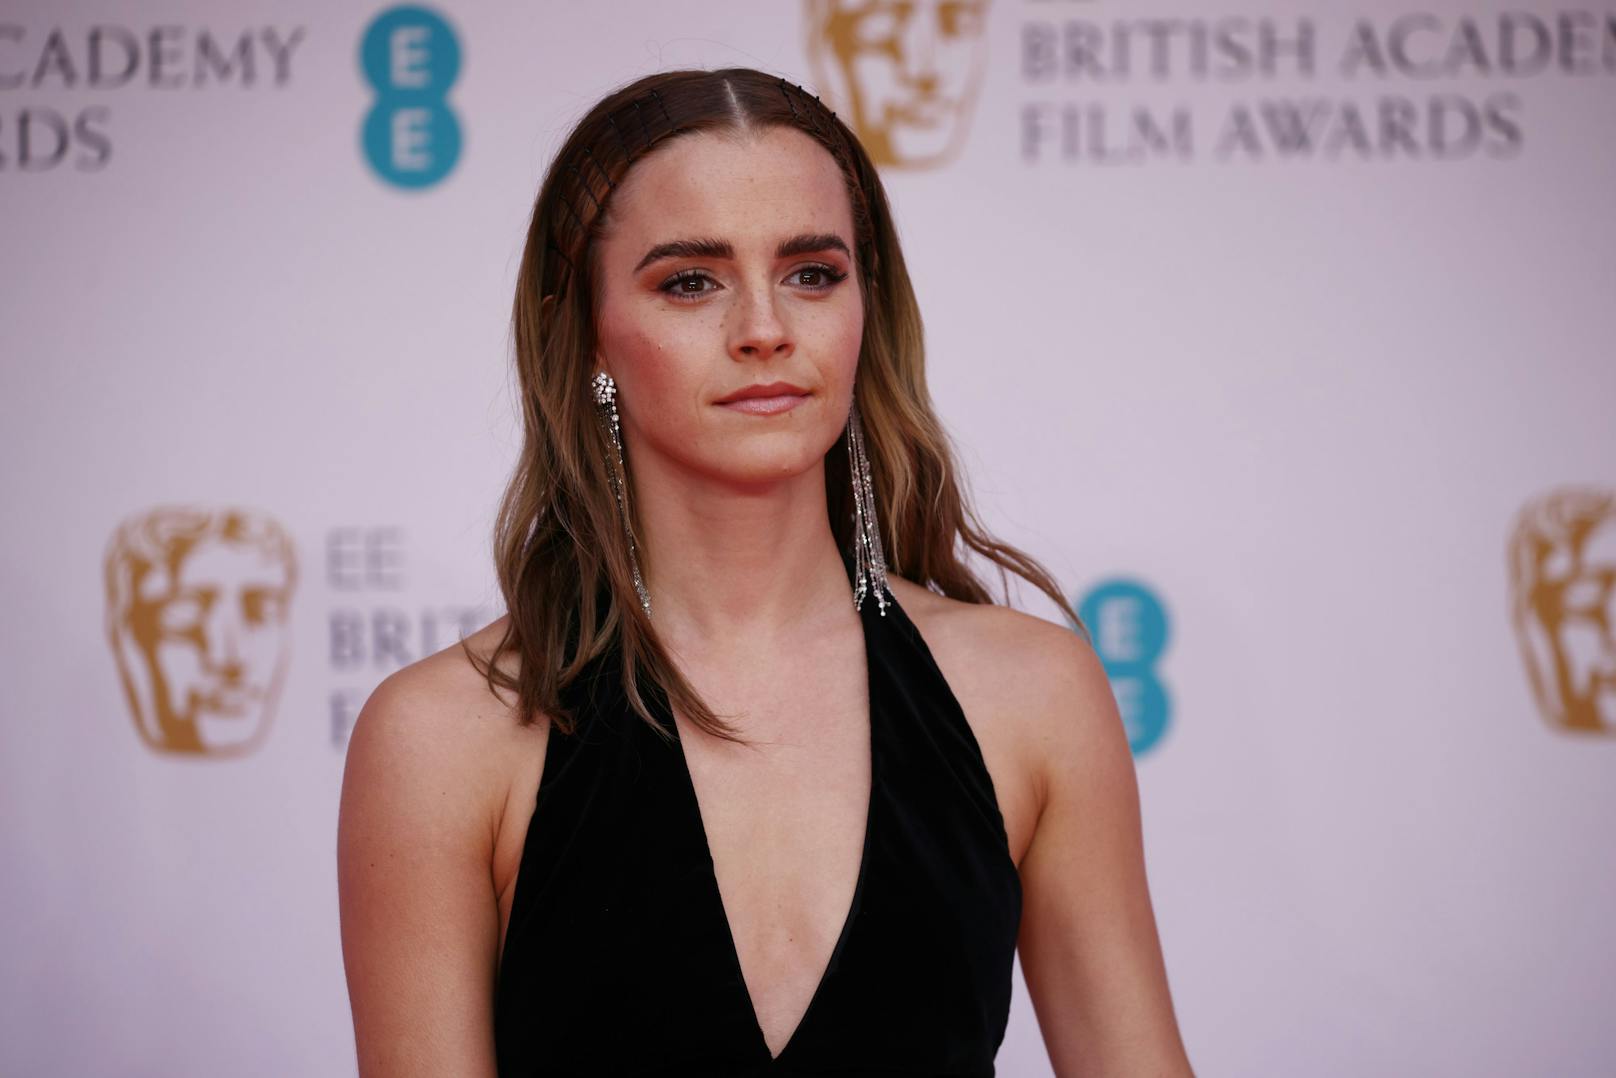 Normalerweise präsentiert sich Emma Watson in hochgeschlossenen Outfits, nicht aber bei den BAFTA-Awards in London.